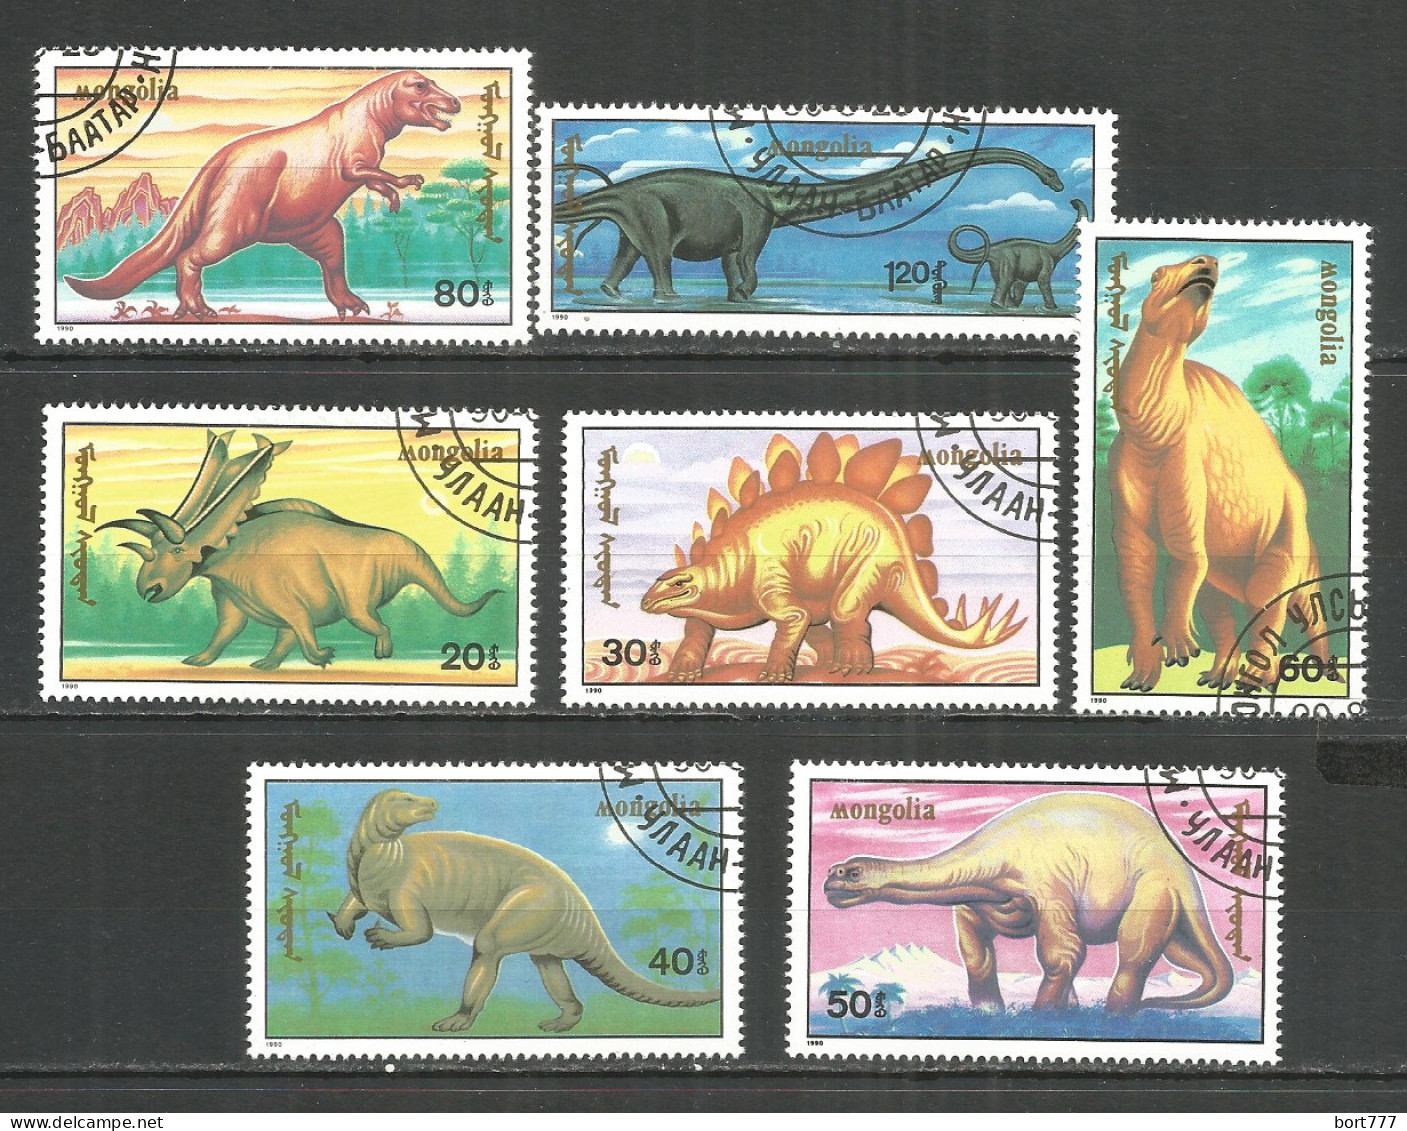 Mongolia 1990 Used Stamps CTO  Dinosaur - Mongolia